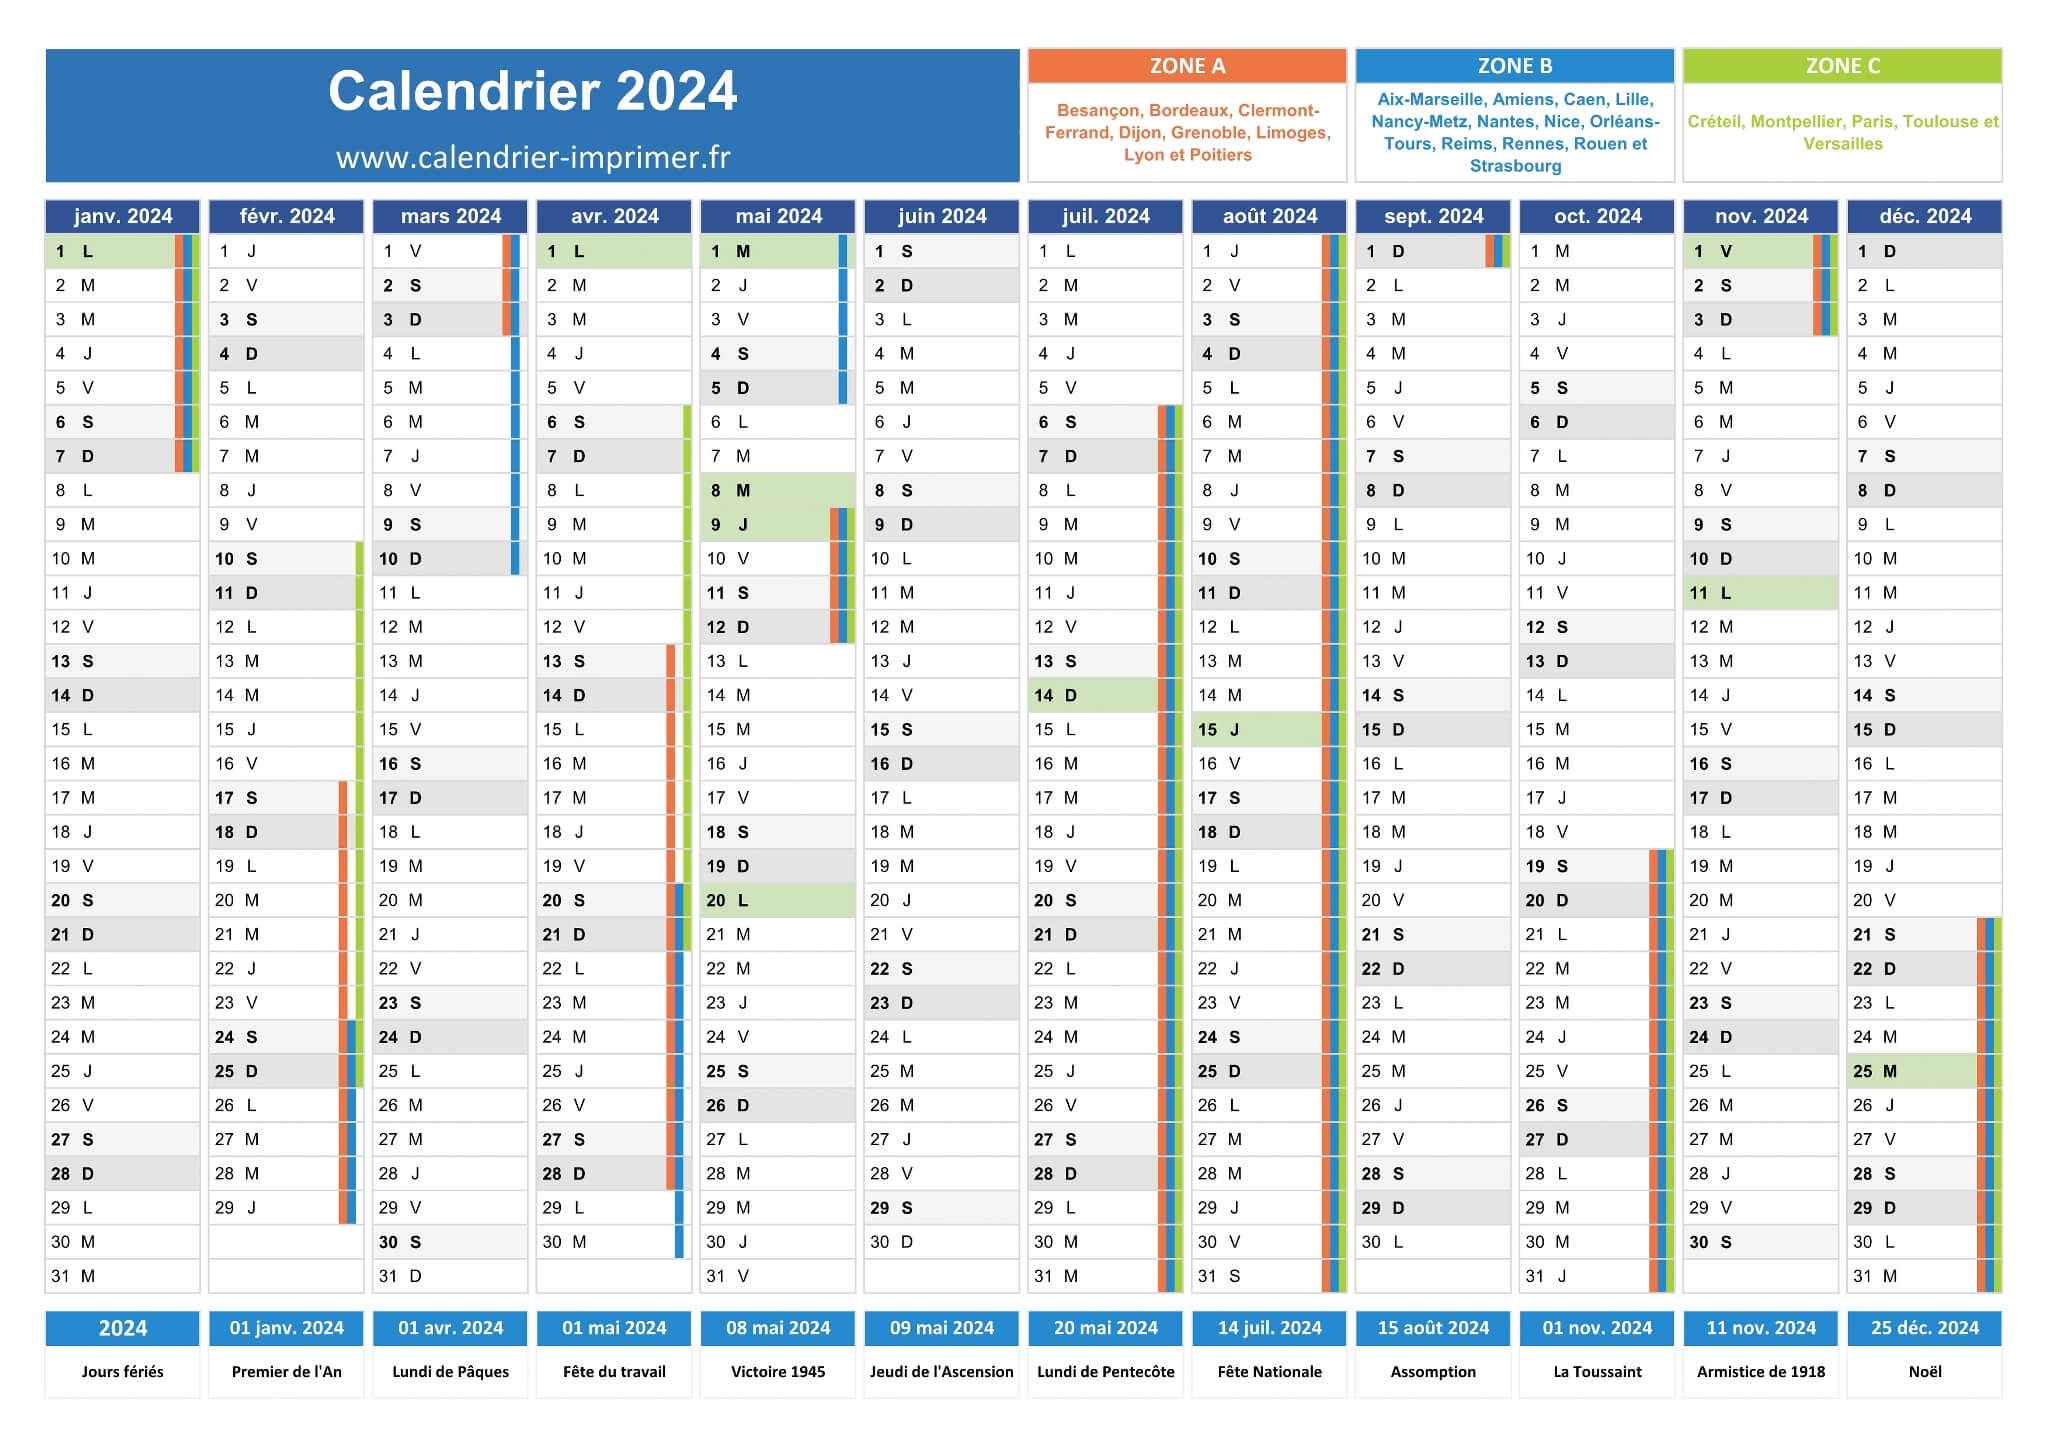 Calendrier 2024 à imprimer - Agenda 2024 gratuit - Planitica